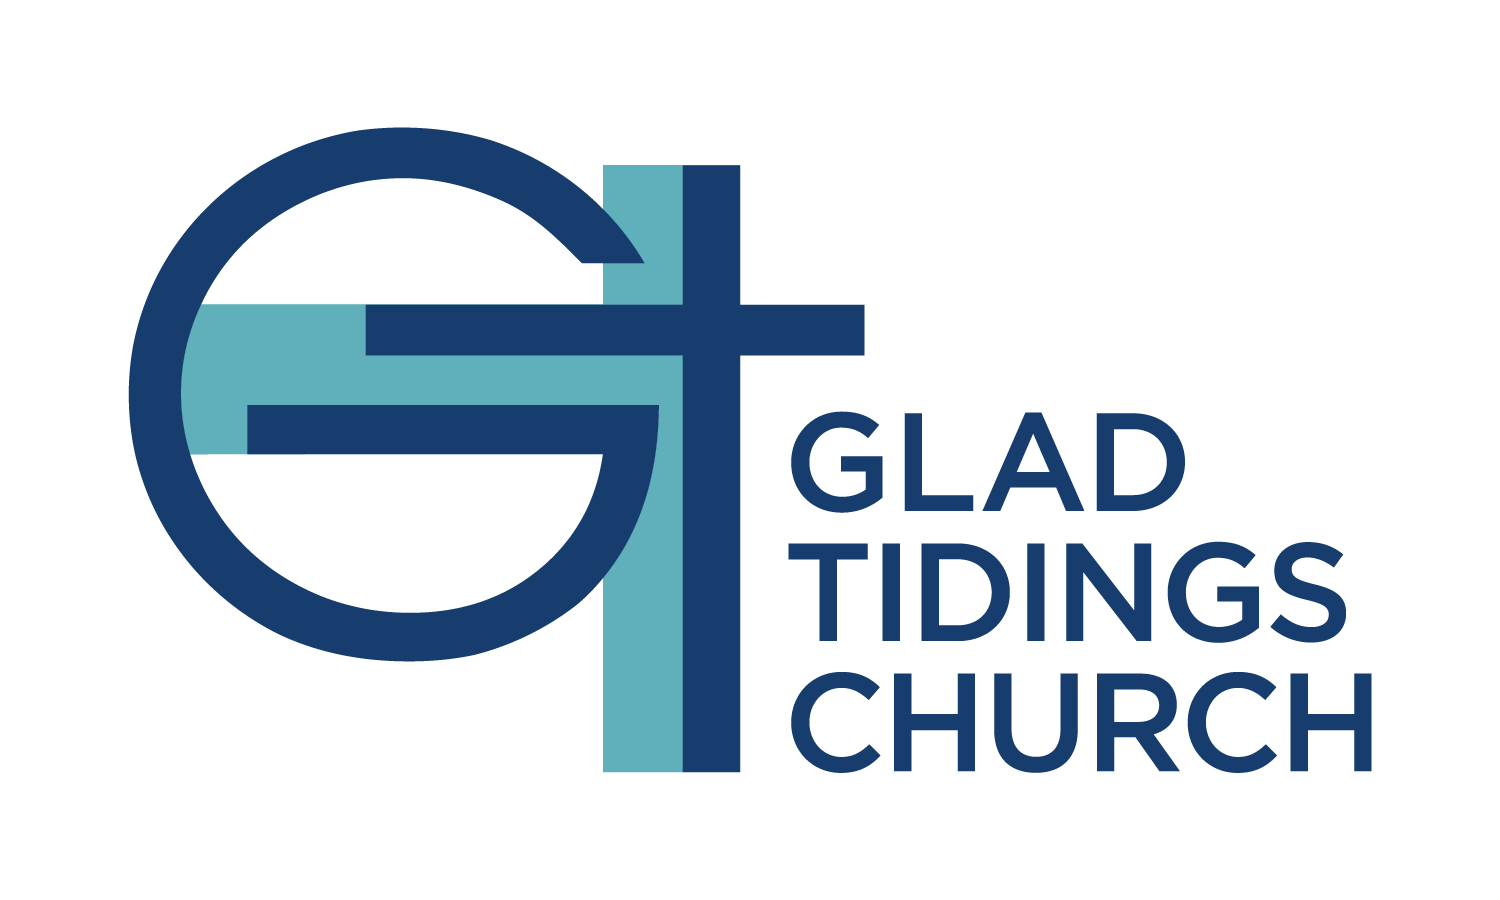 Glad Tidings Church